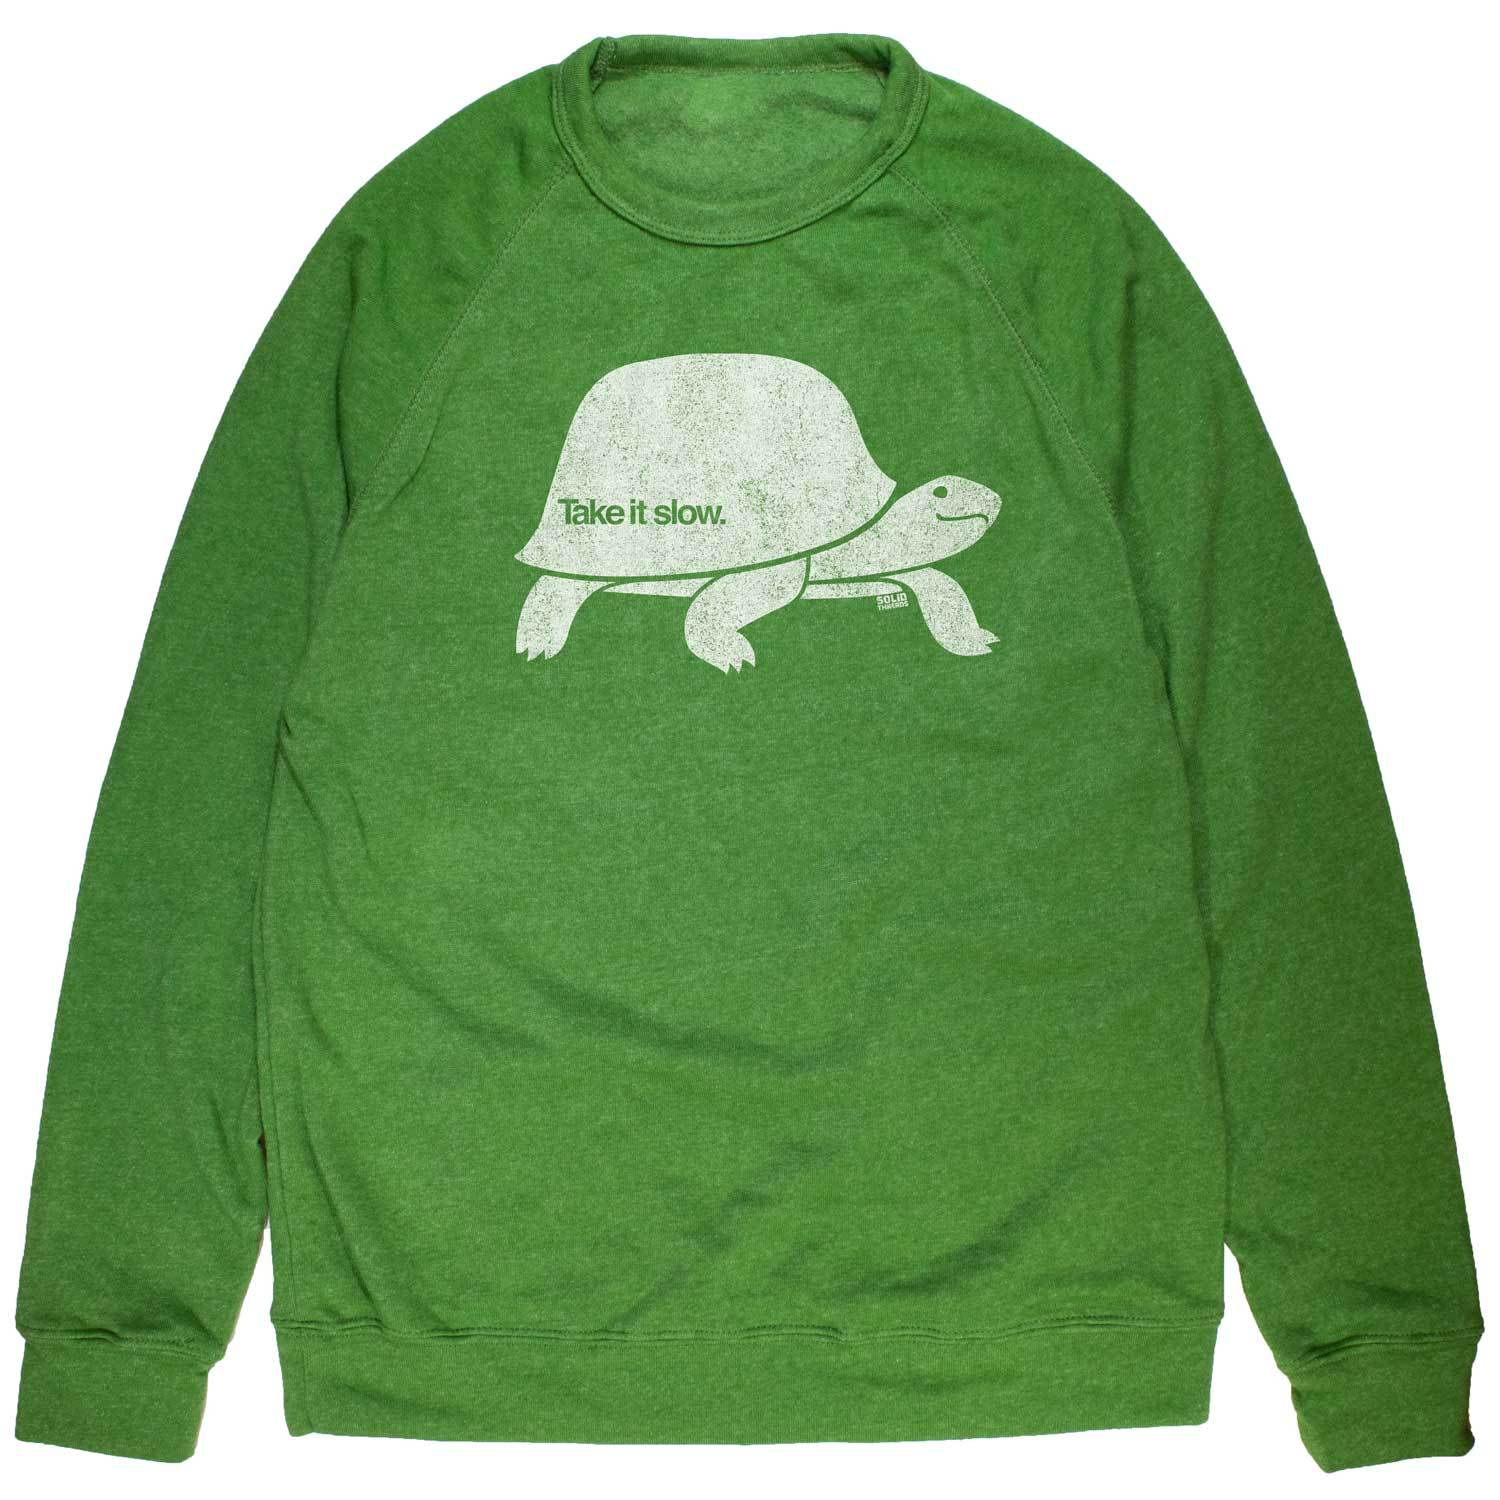 Vintage Graphic Sweatshirts & | Shop Now - Solid Threads